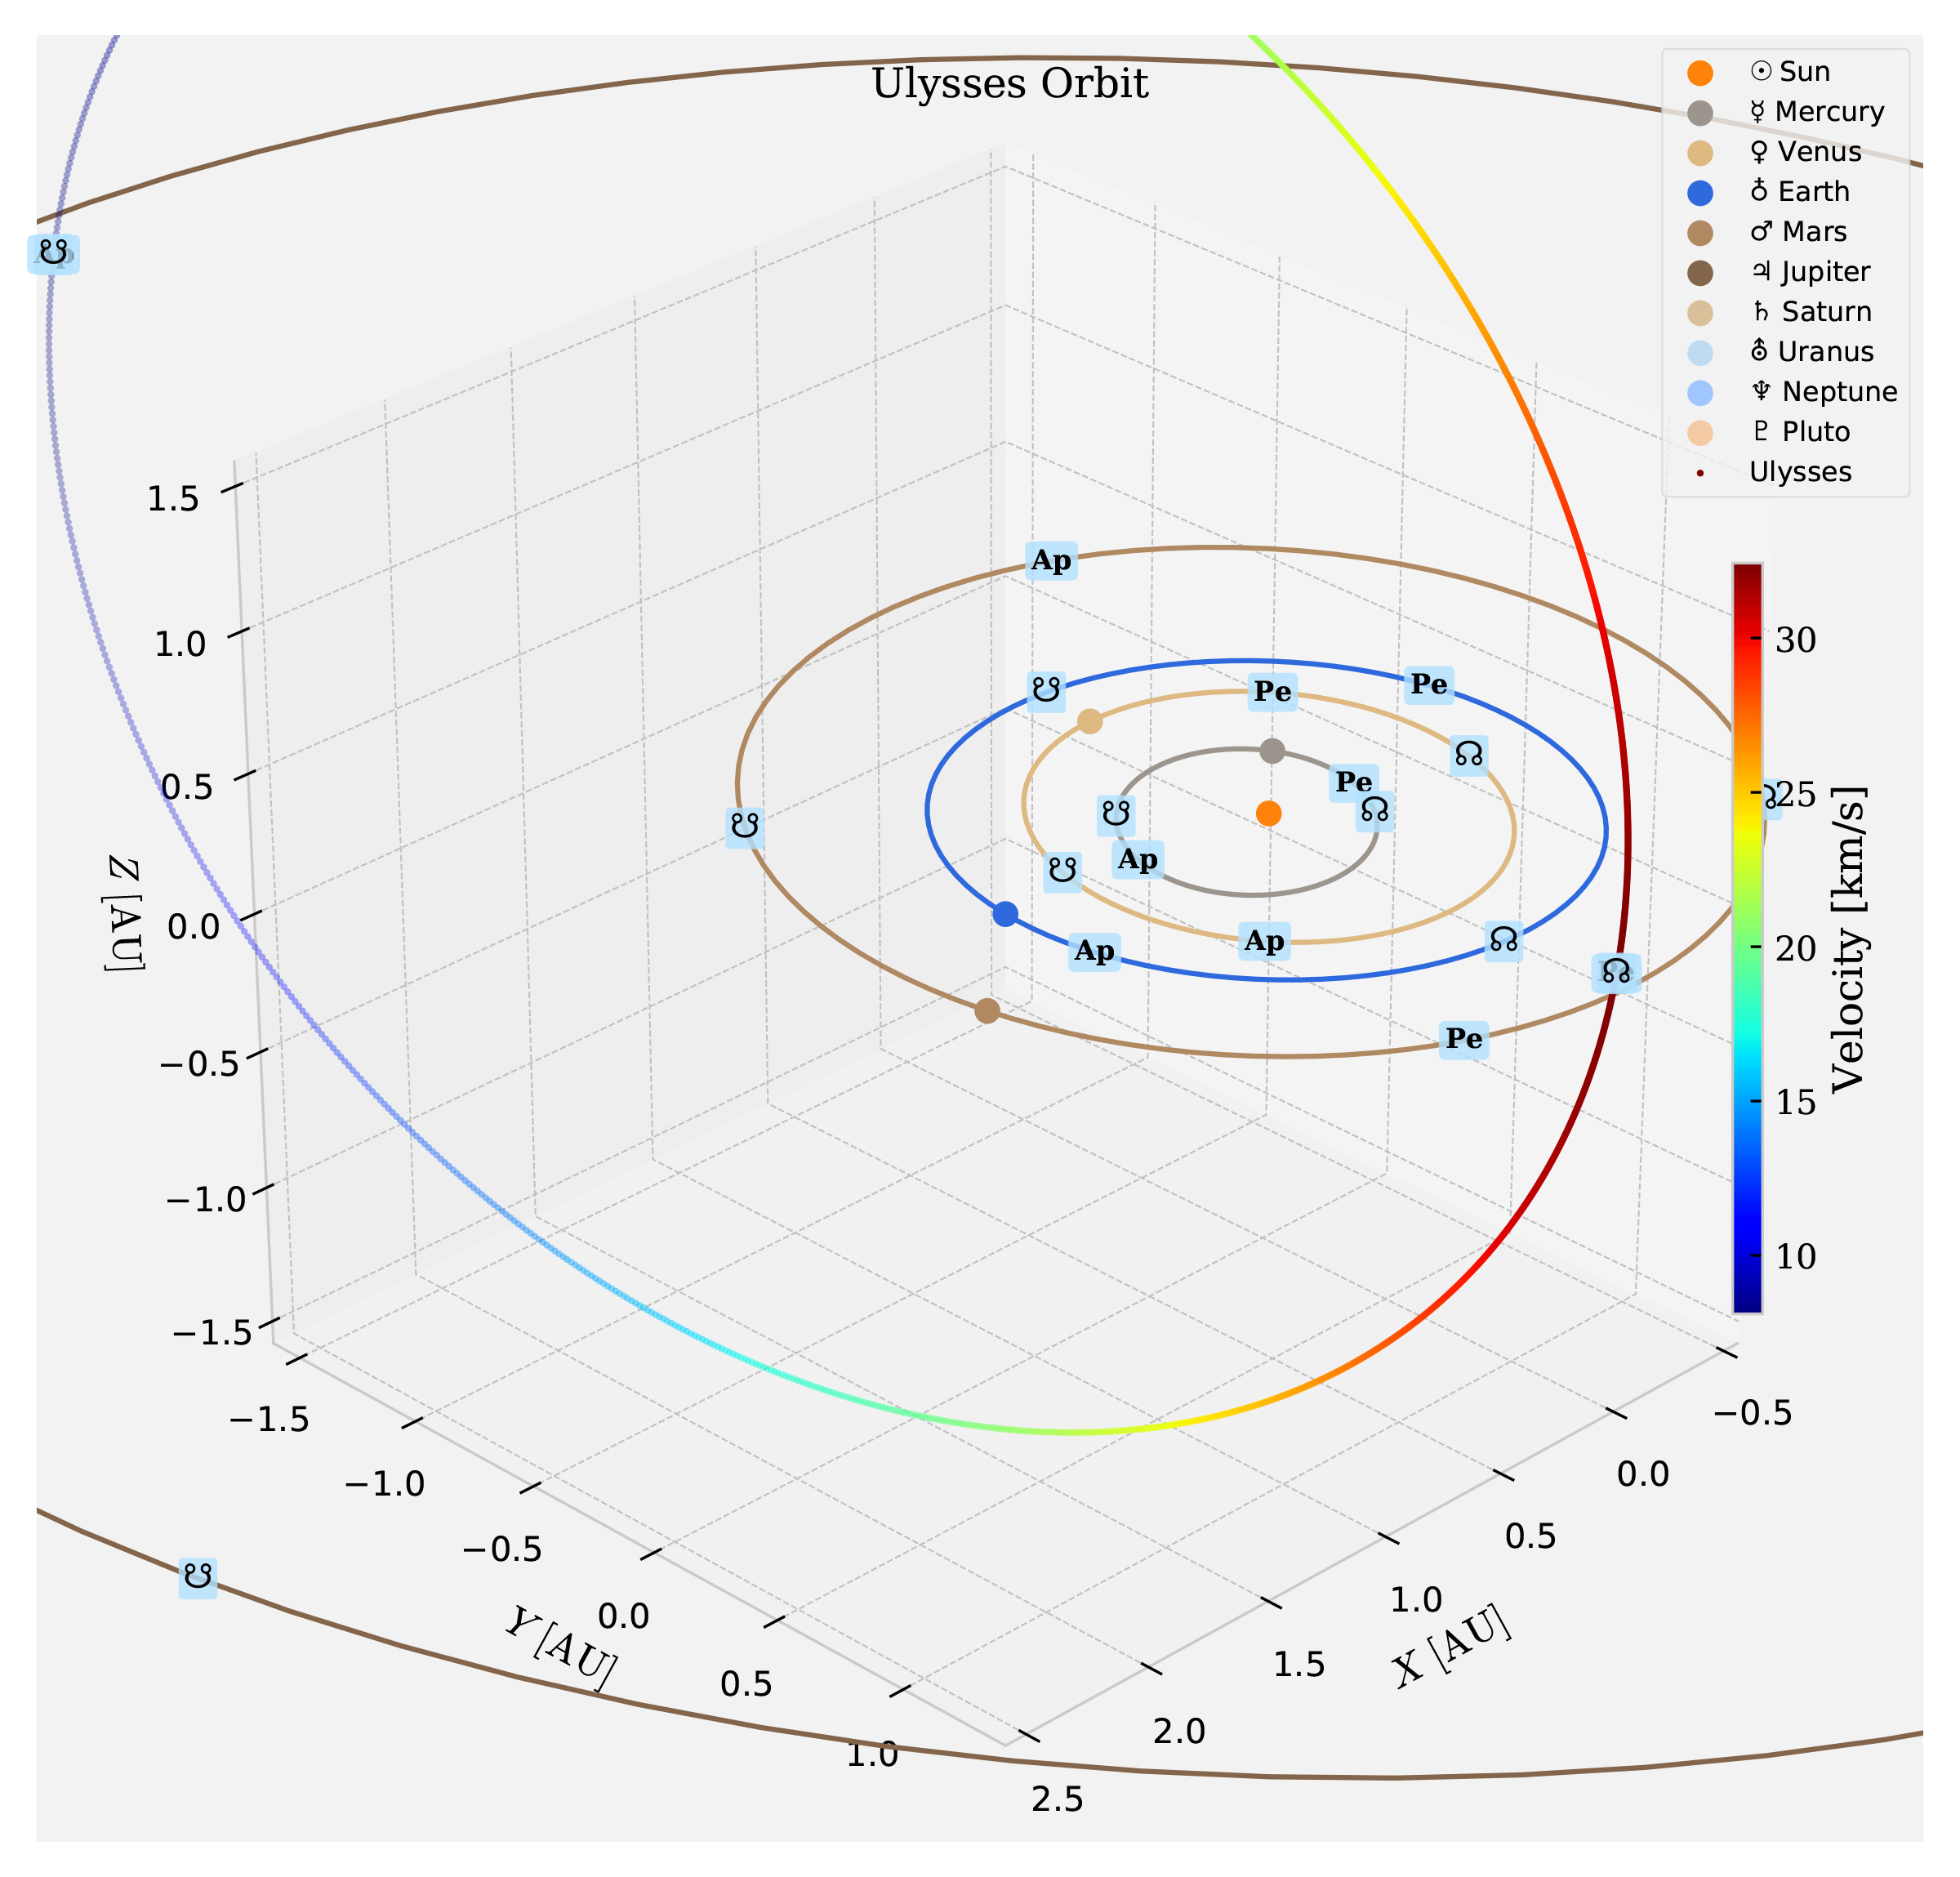 Solar System and Ulysses Orbit